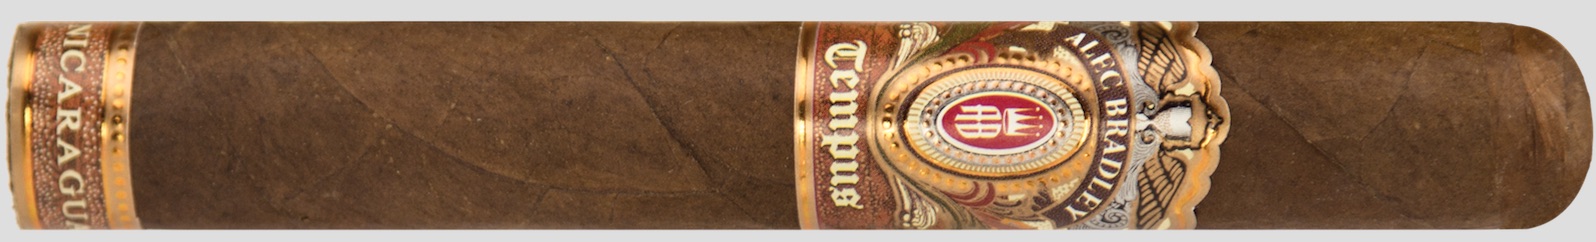 tempus-nicaragua-single-cigars